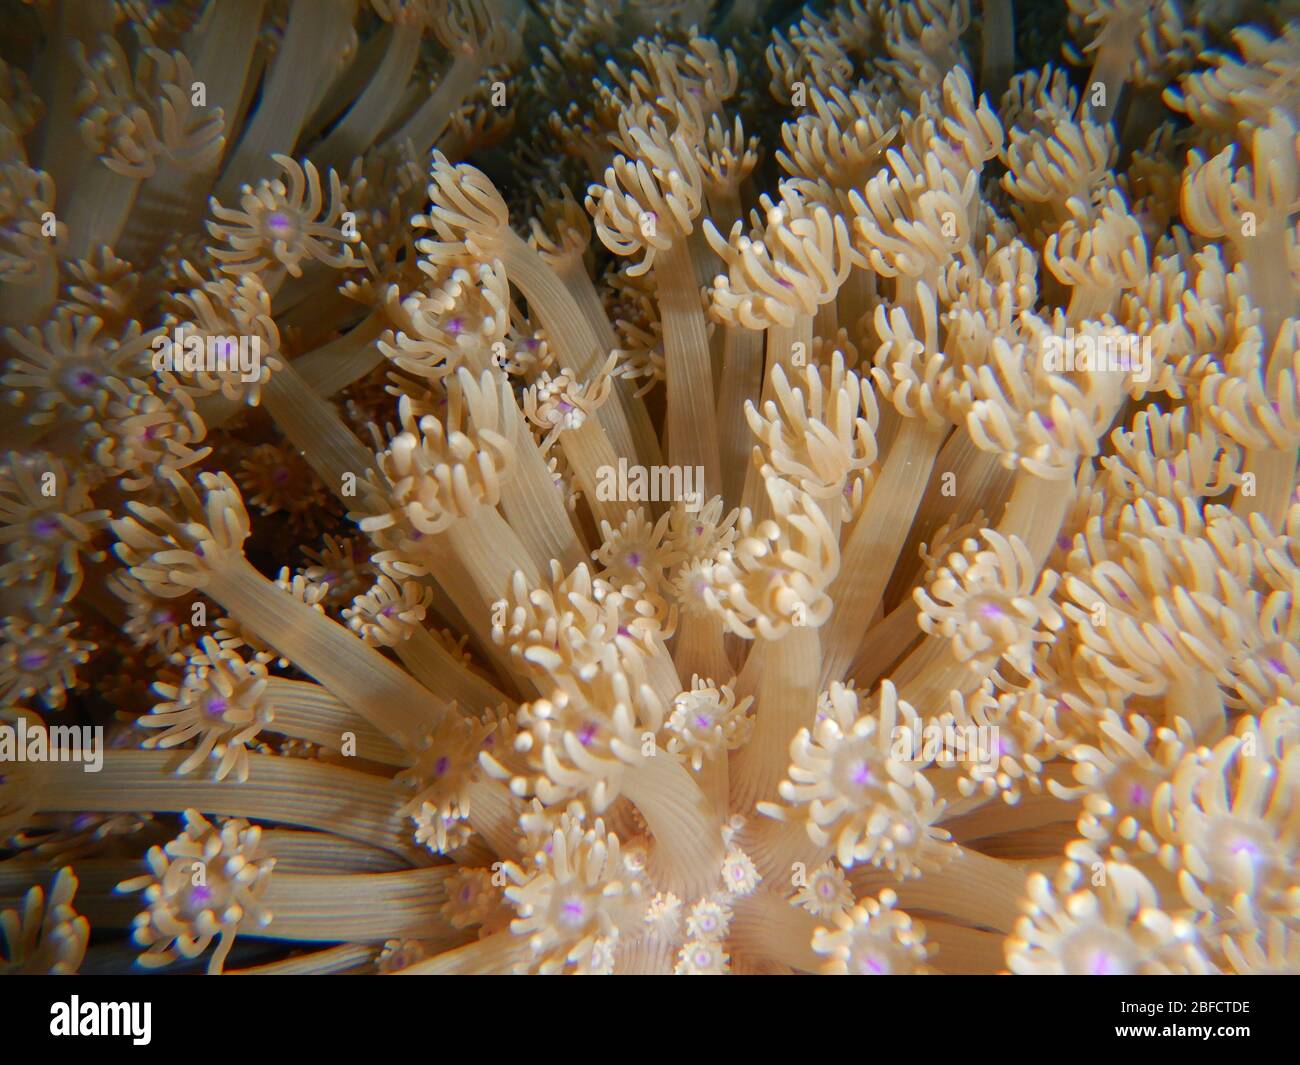 Soft Corals, Alcyonacea, gorgonians, sea fans Stock Photo